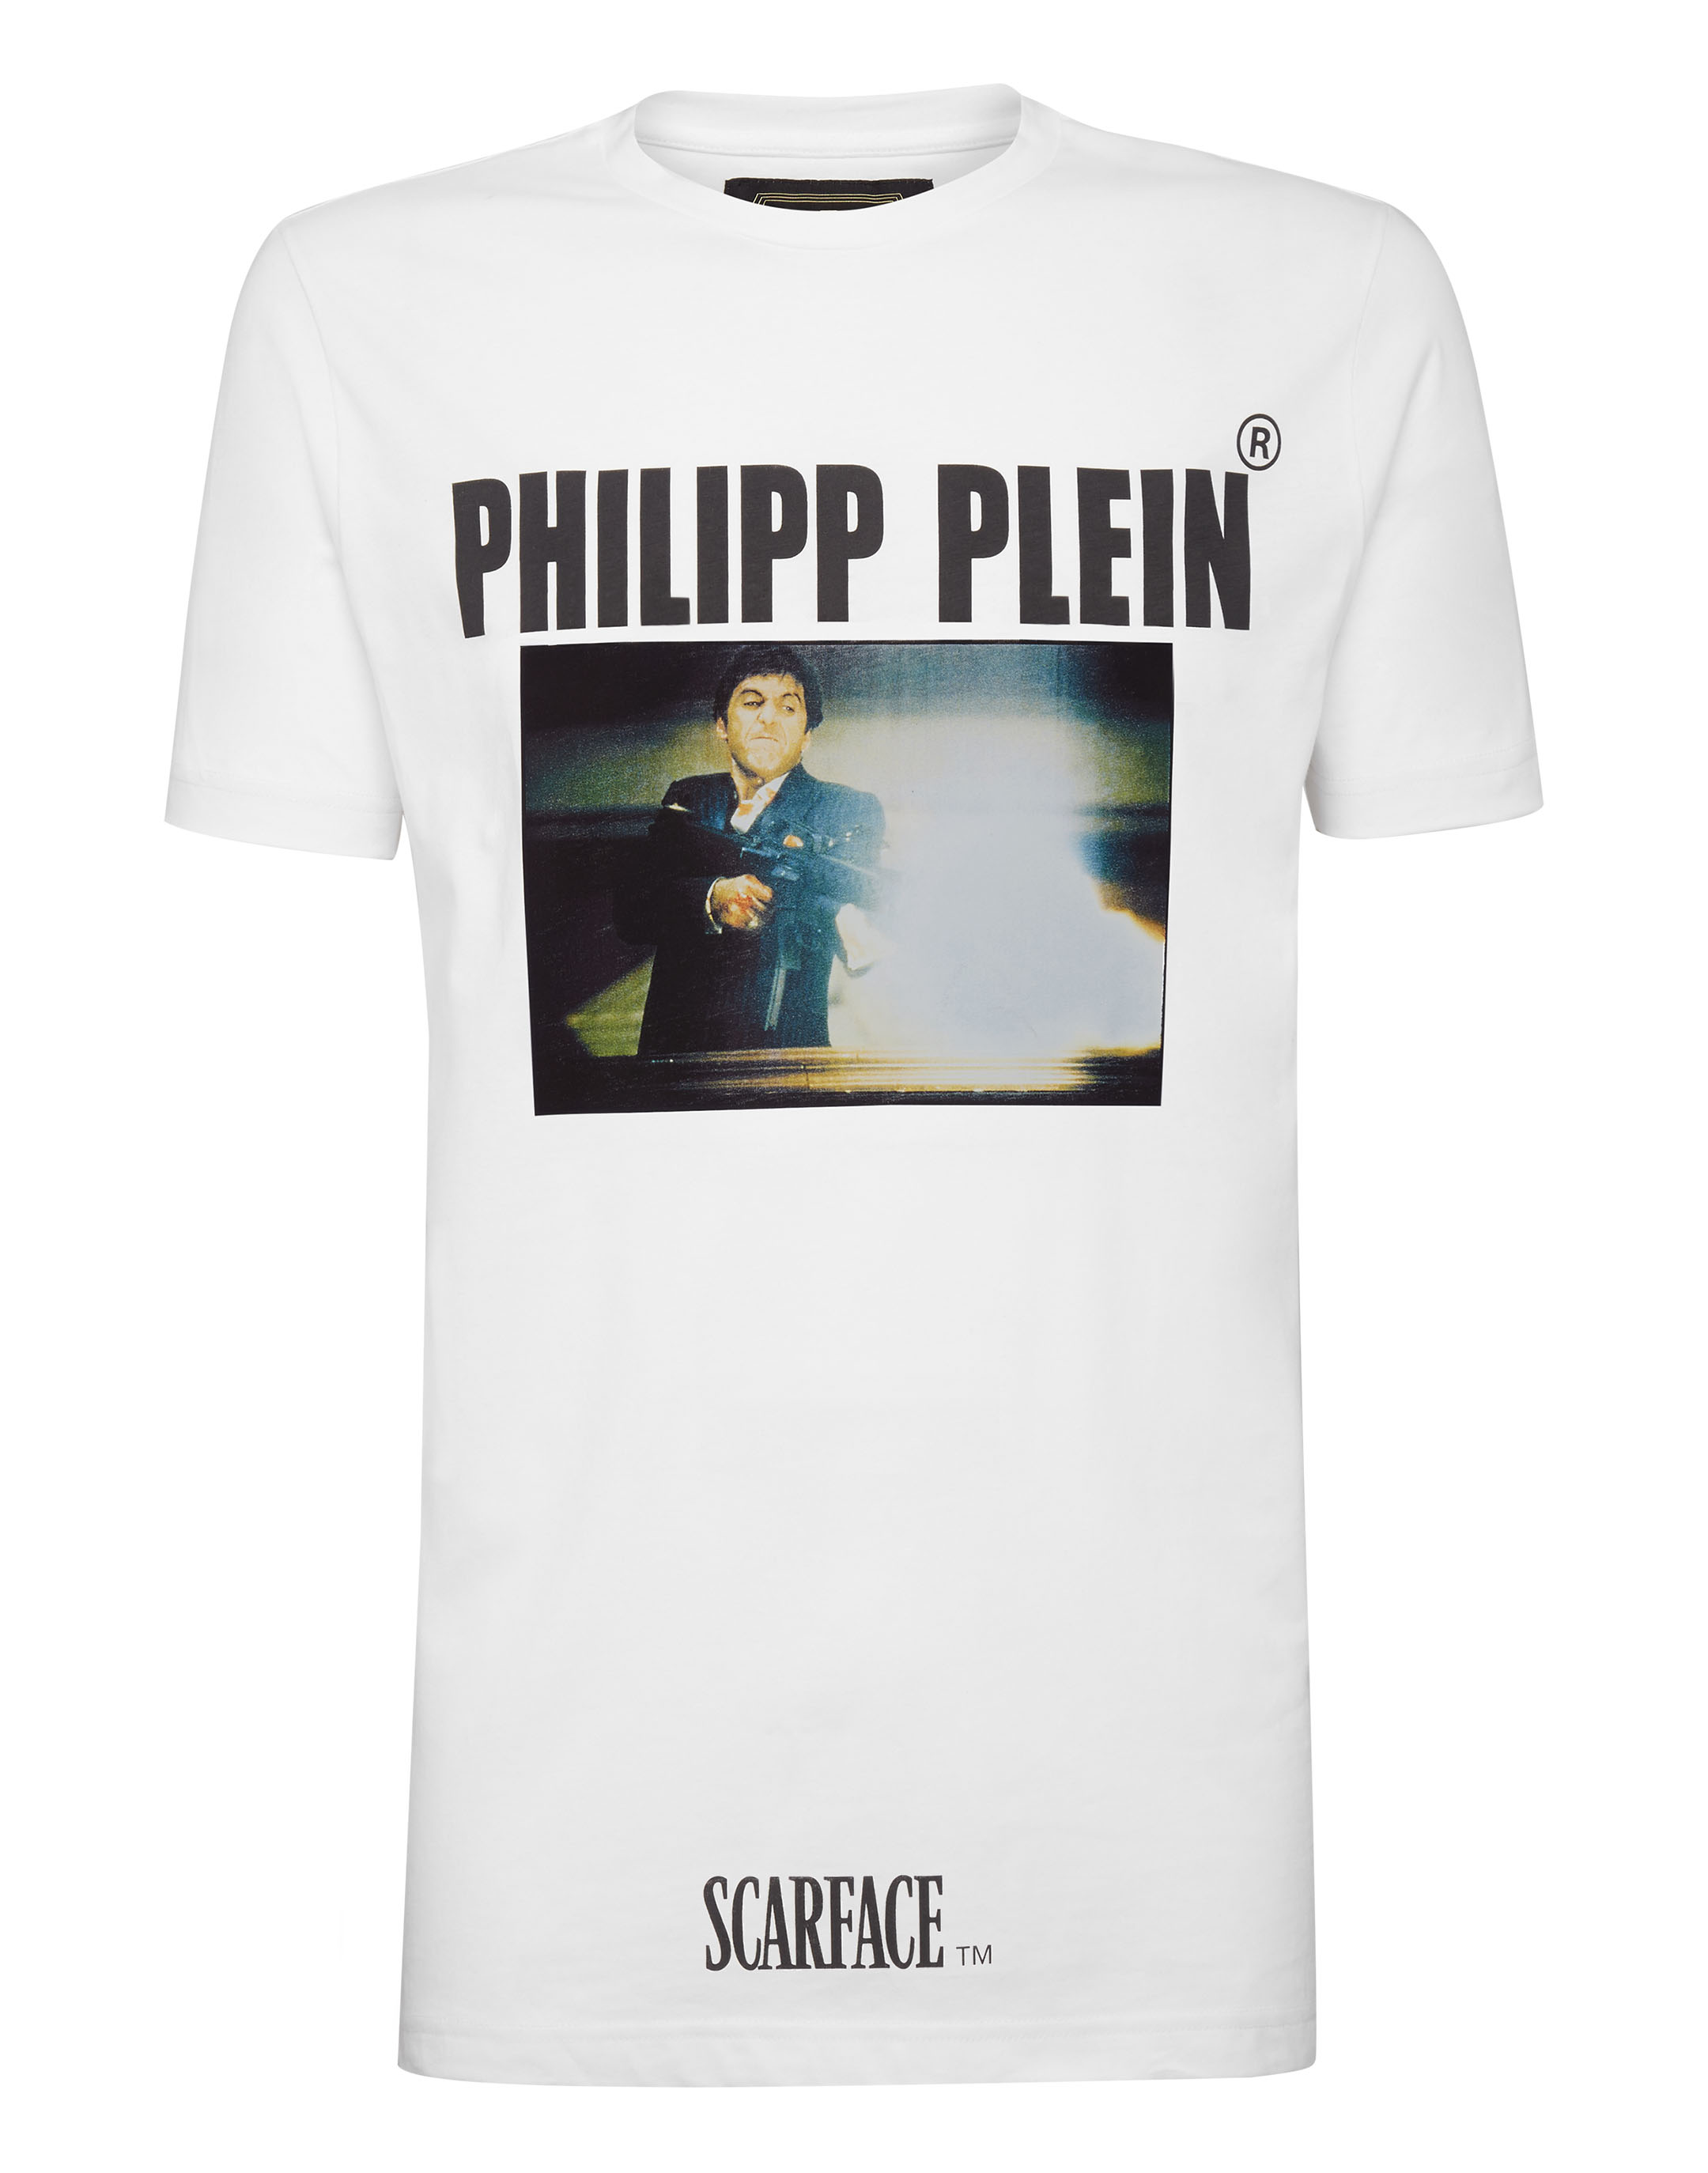 philipp plein scarface shirt